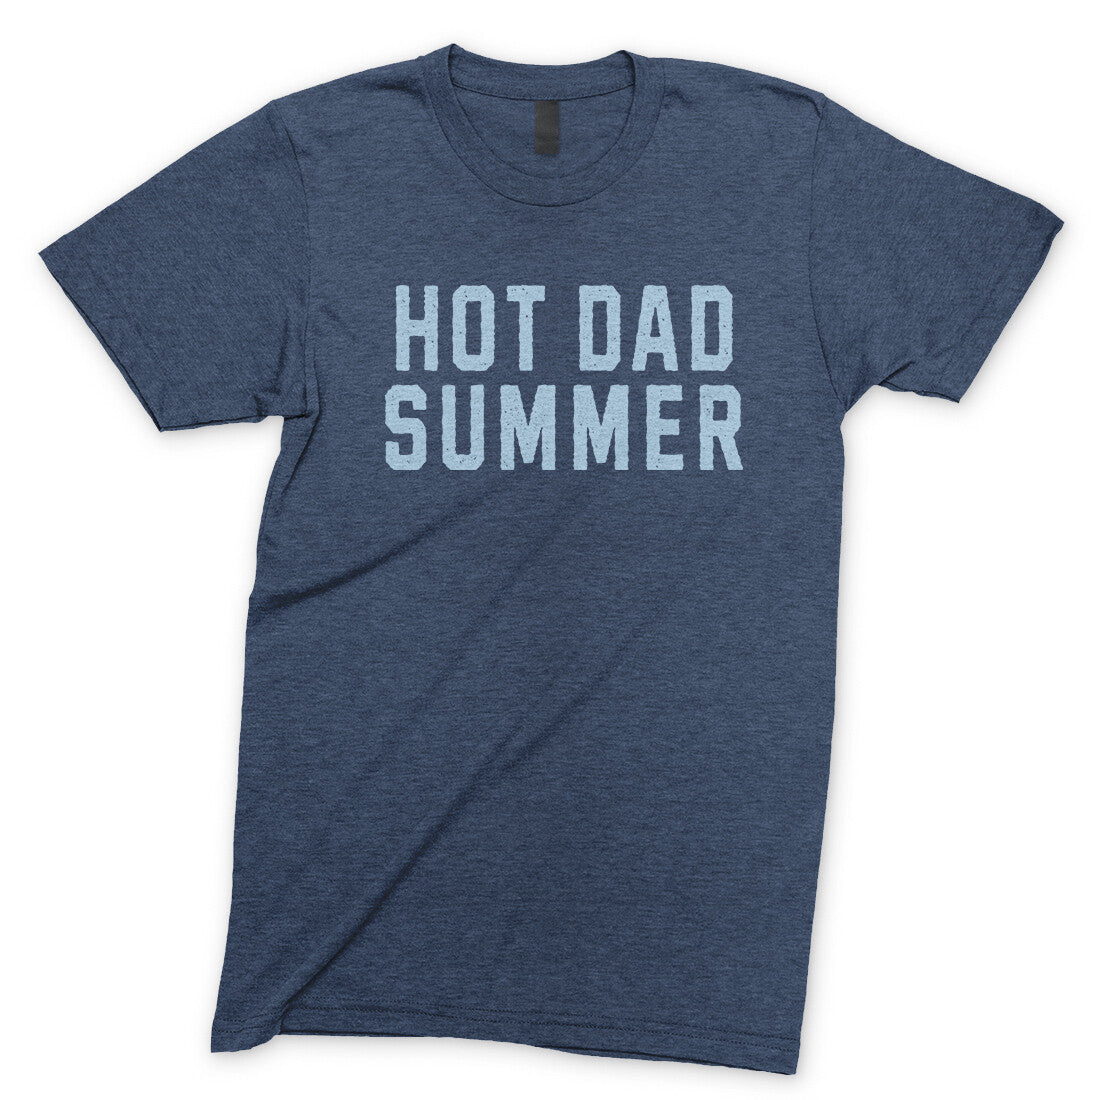 Hot Dad Summer in Navy Heather Color